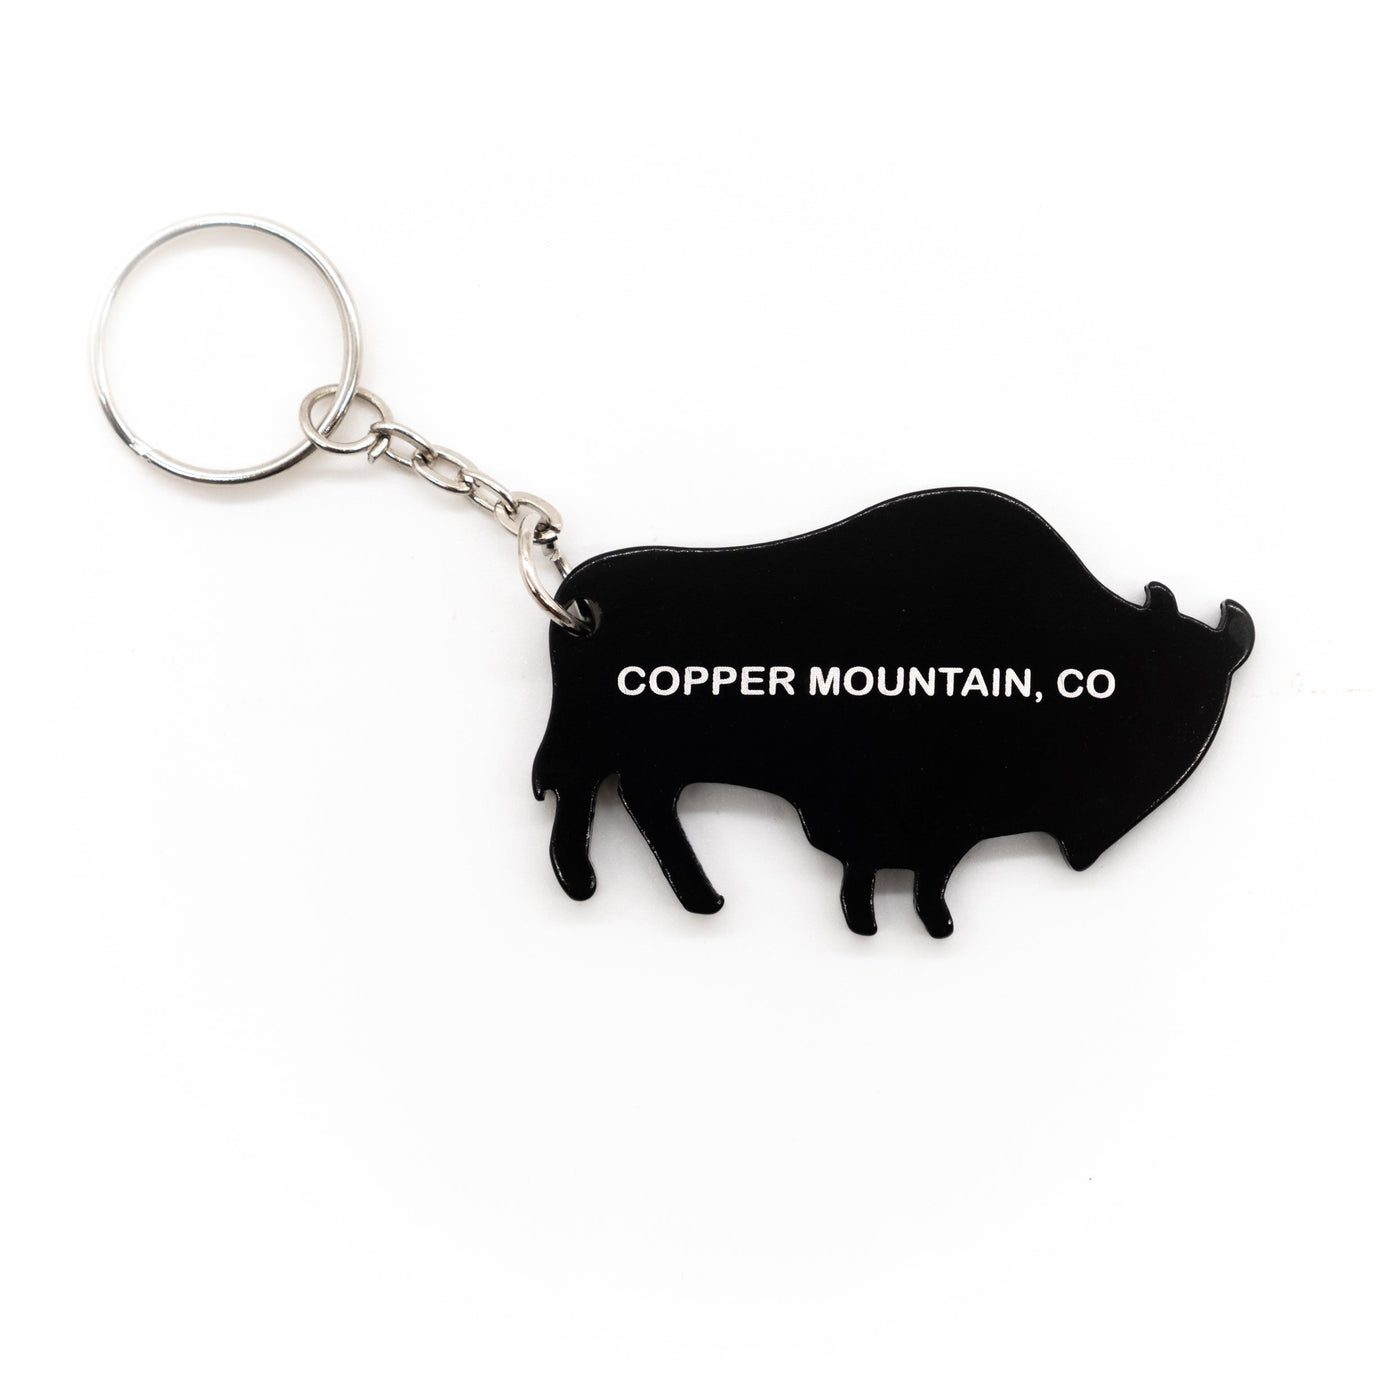 Copper Mountain Buffalo Keychain with Bottle Opener